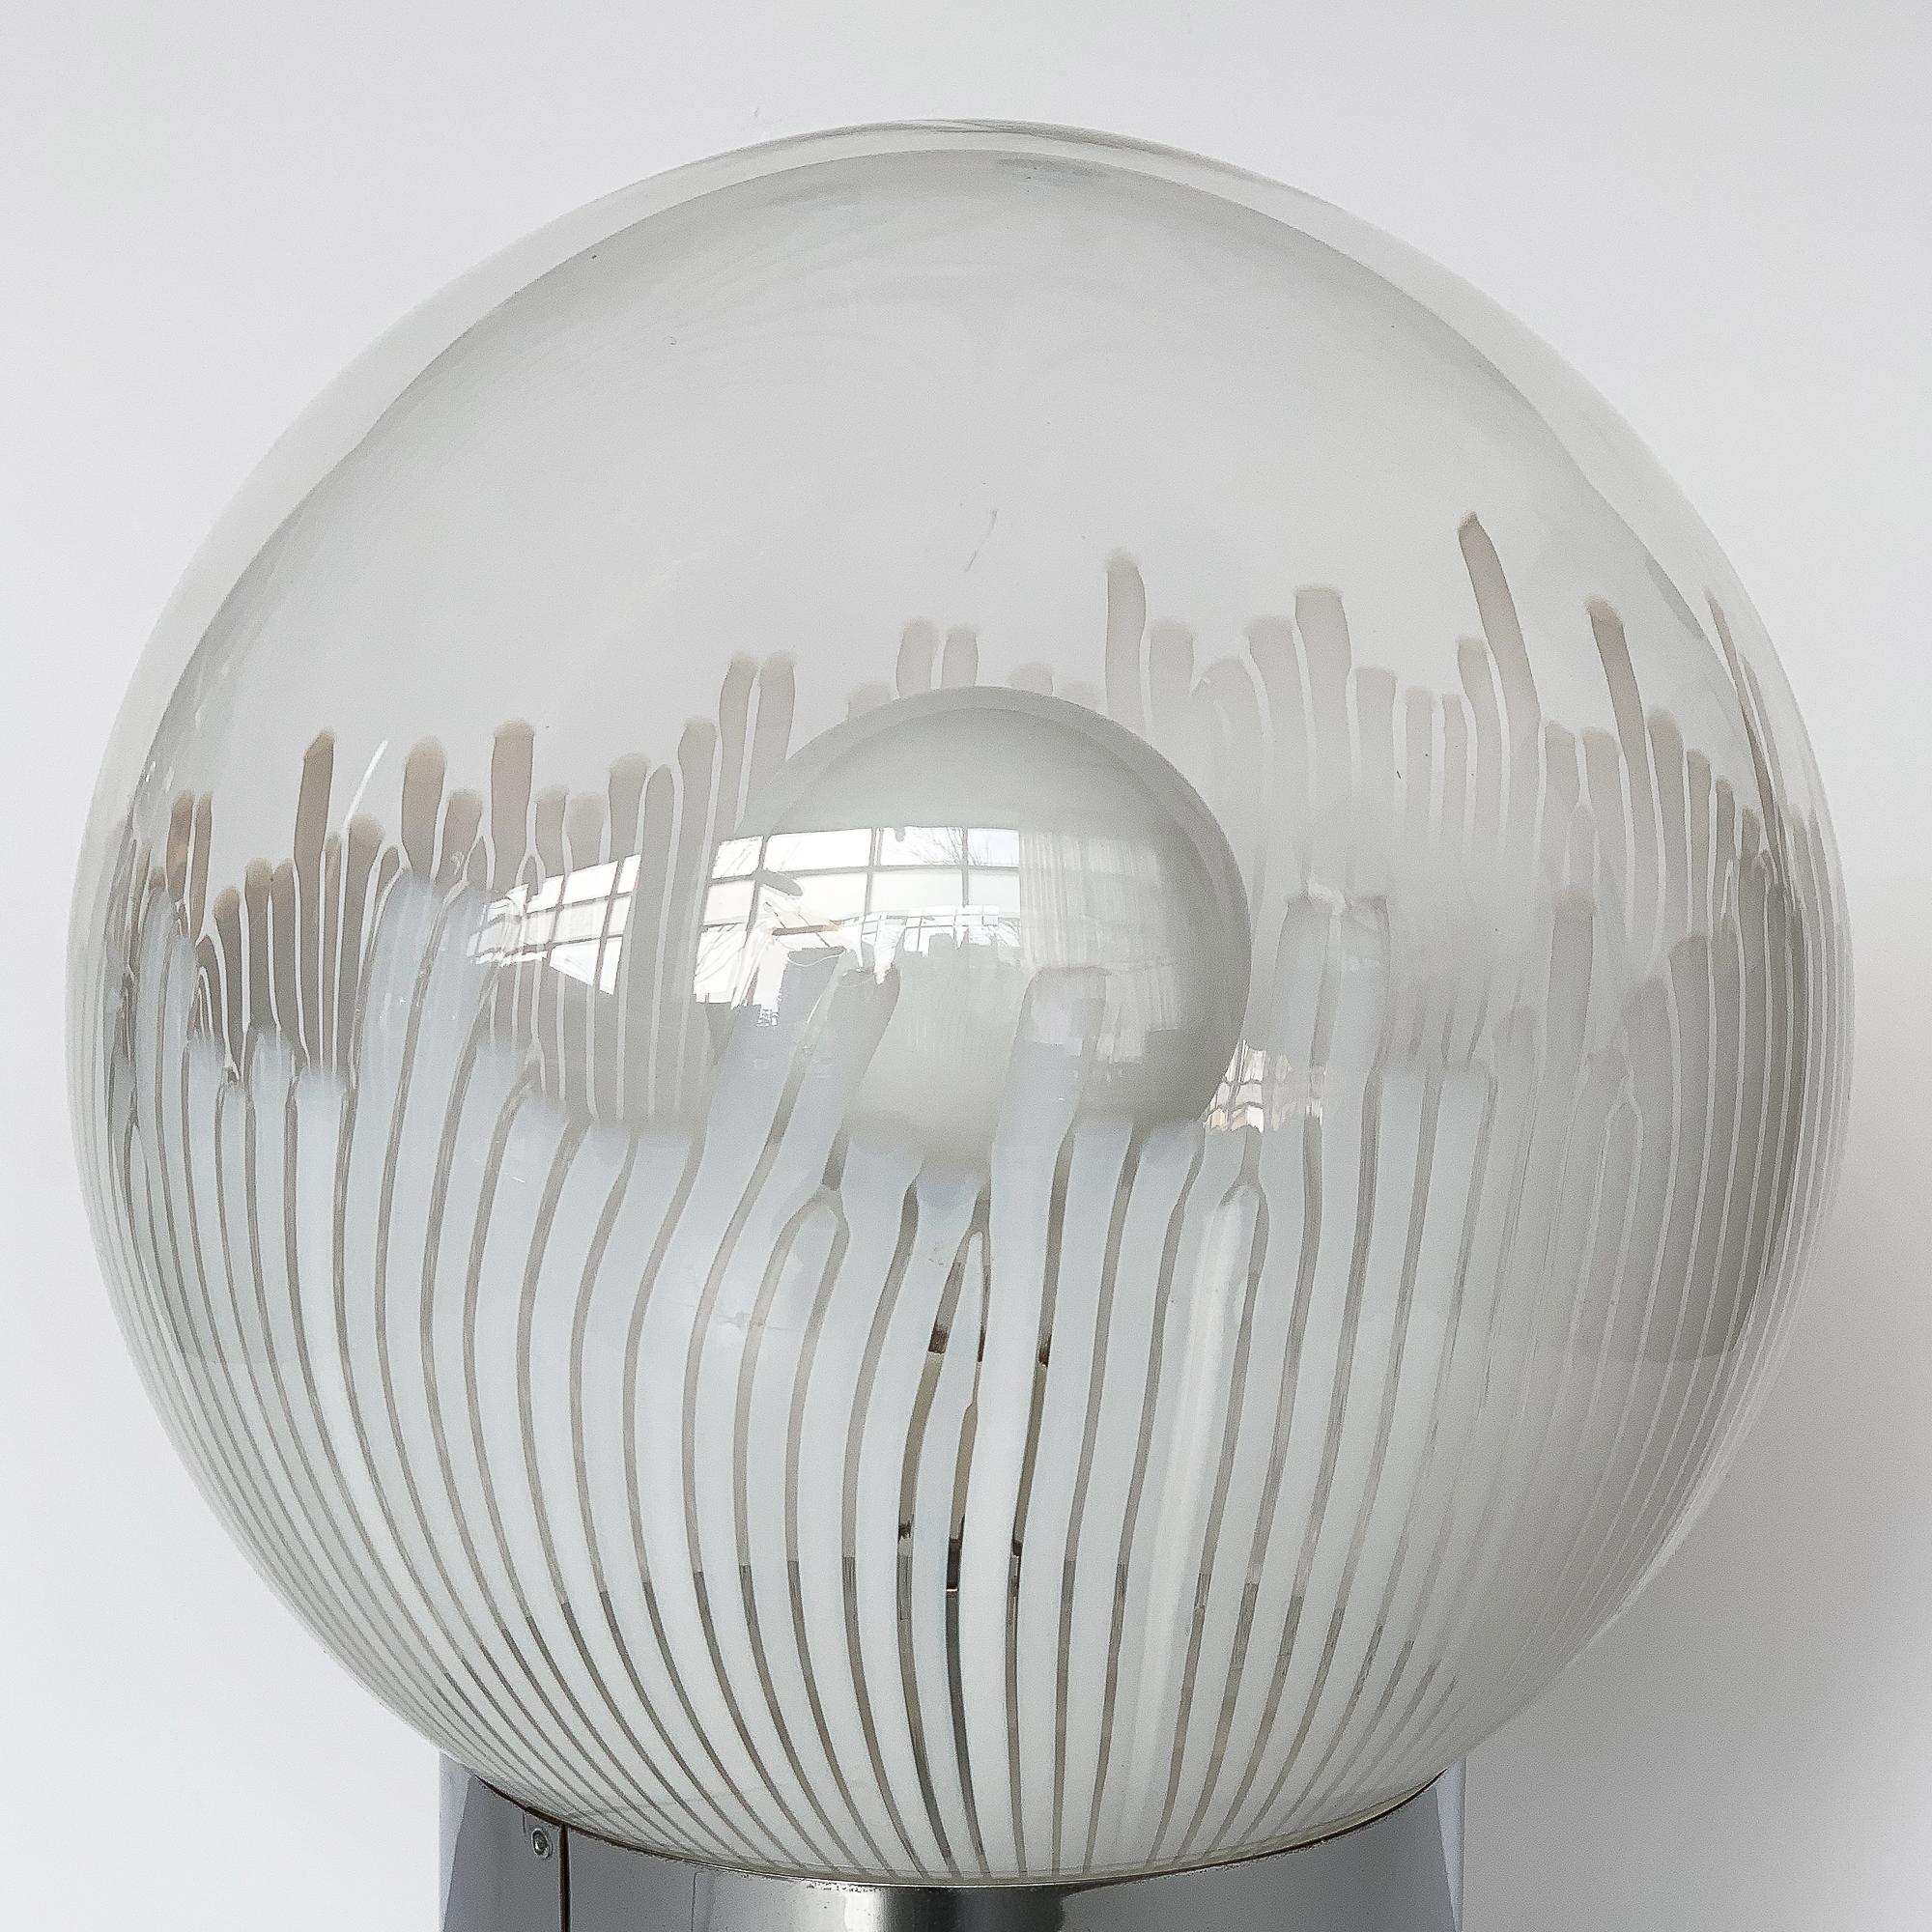 Ludovico Diaz de Santillana Murano Glass Anemoni Table Lamp for Venini 1